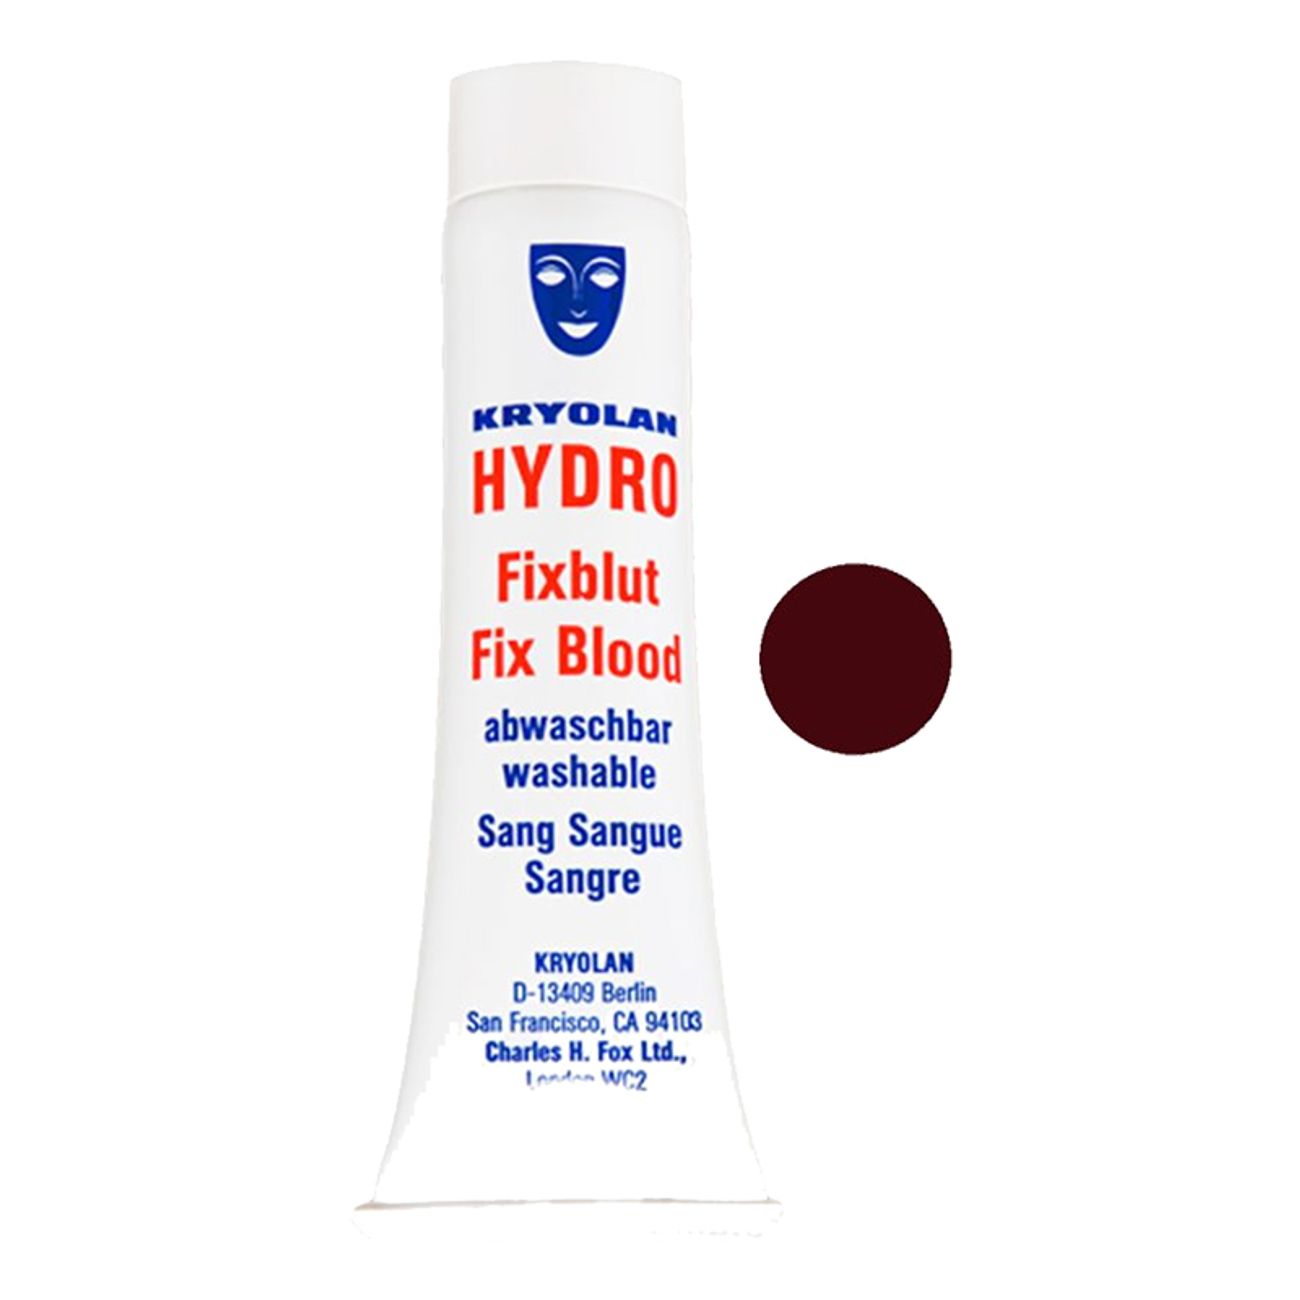 hydro-fix-blod-74182-1